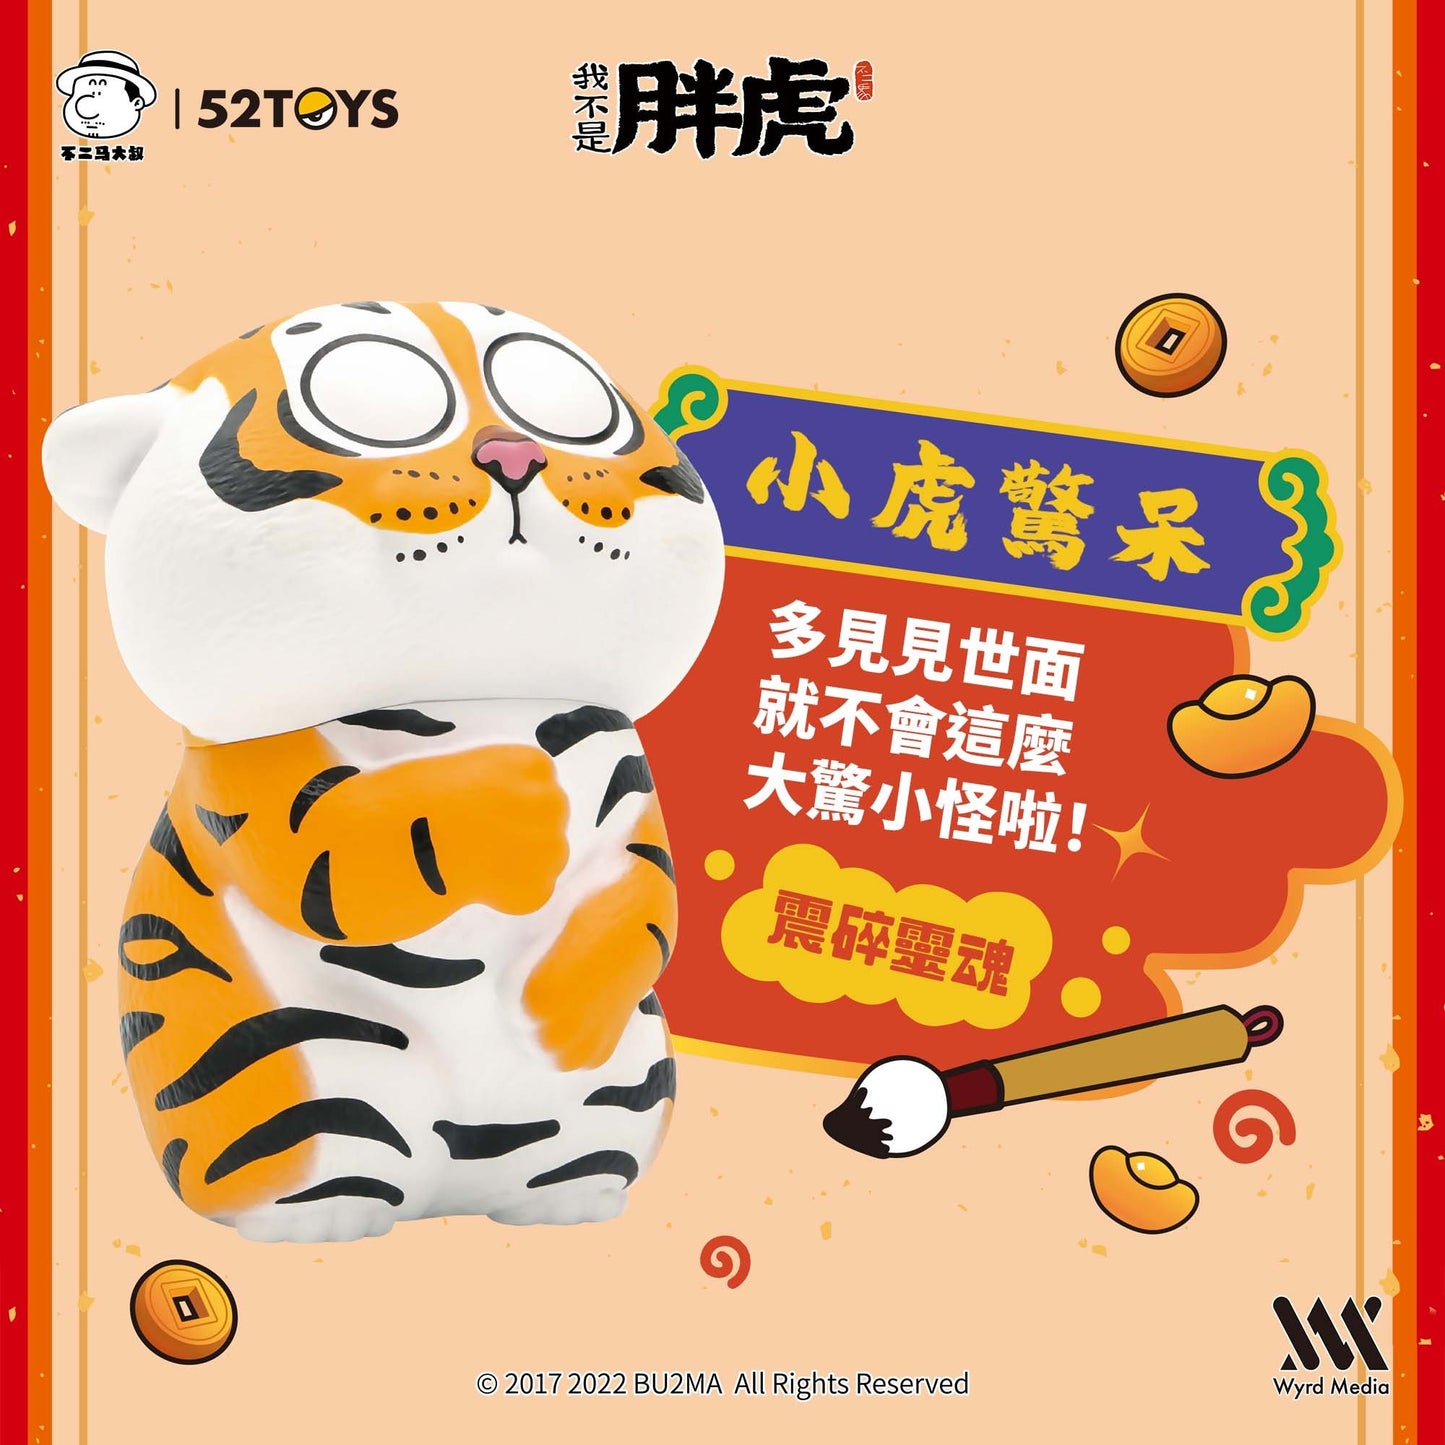 Fat Tiger's Tiger Cub Xiaohu Daily series , Random Blind Box, 6 Designs, Bu2ma x 52Toys